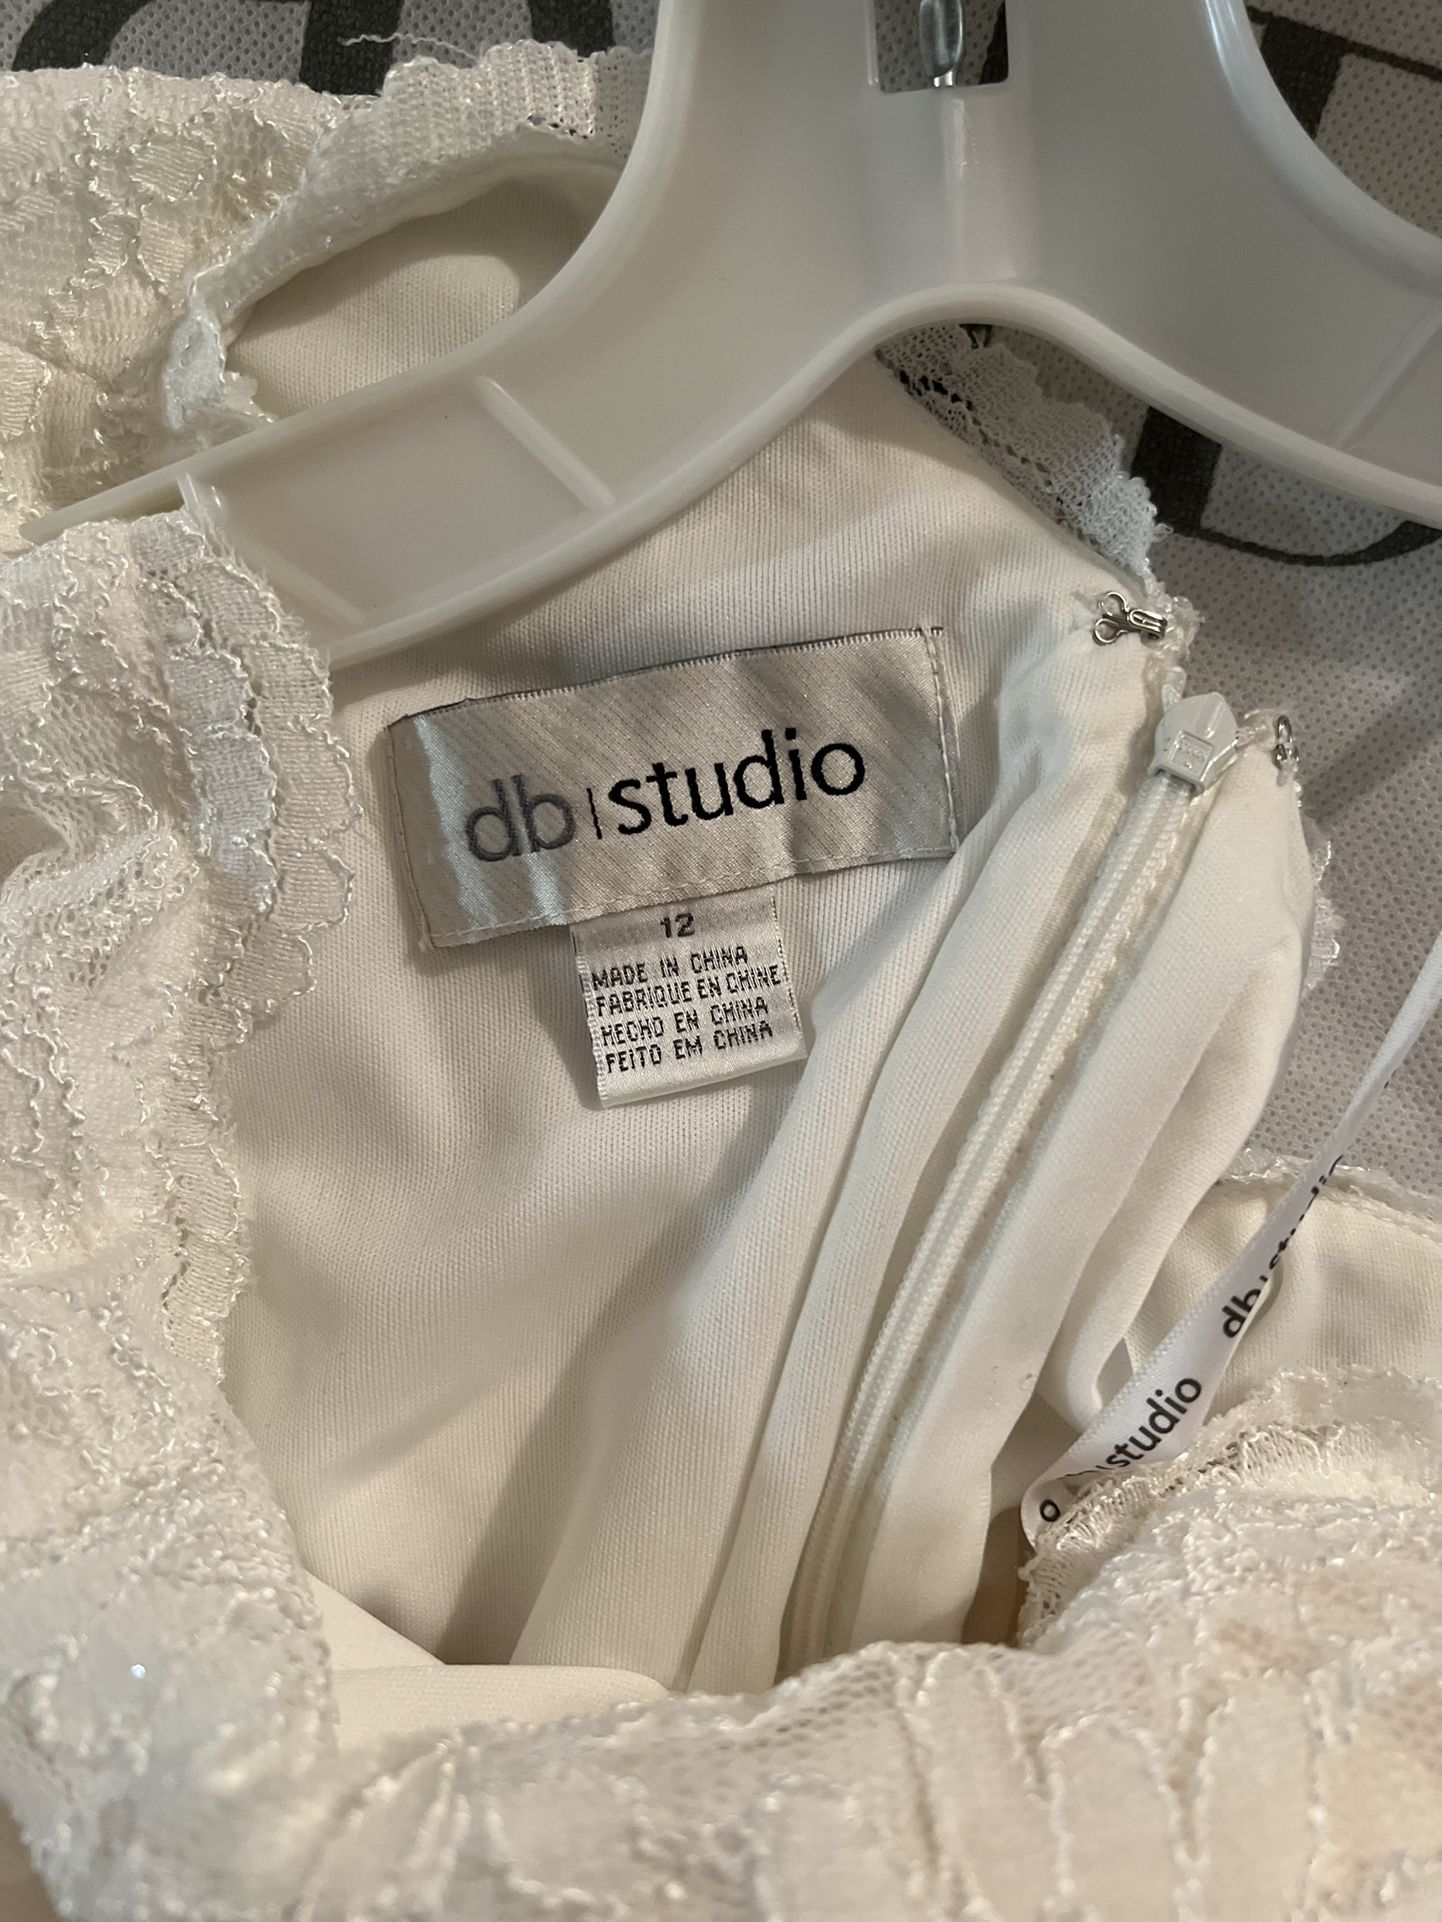 Size 12 David’s Bridal Wedding Dress Package 